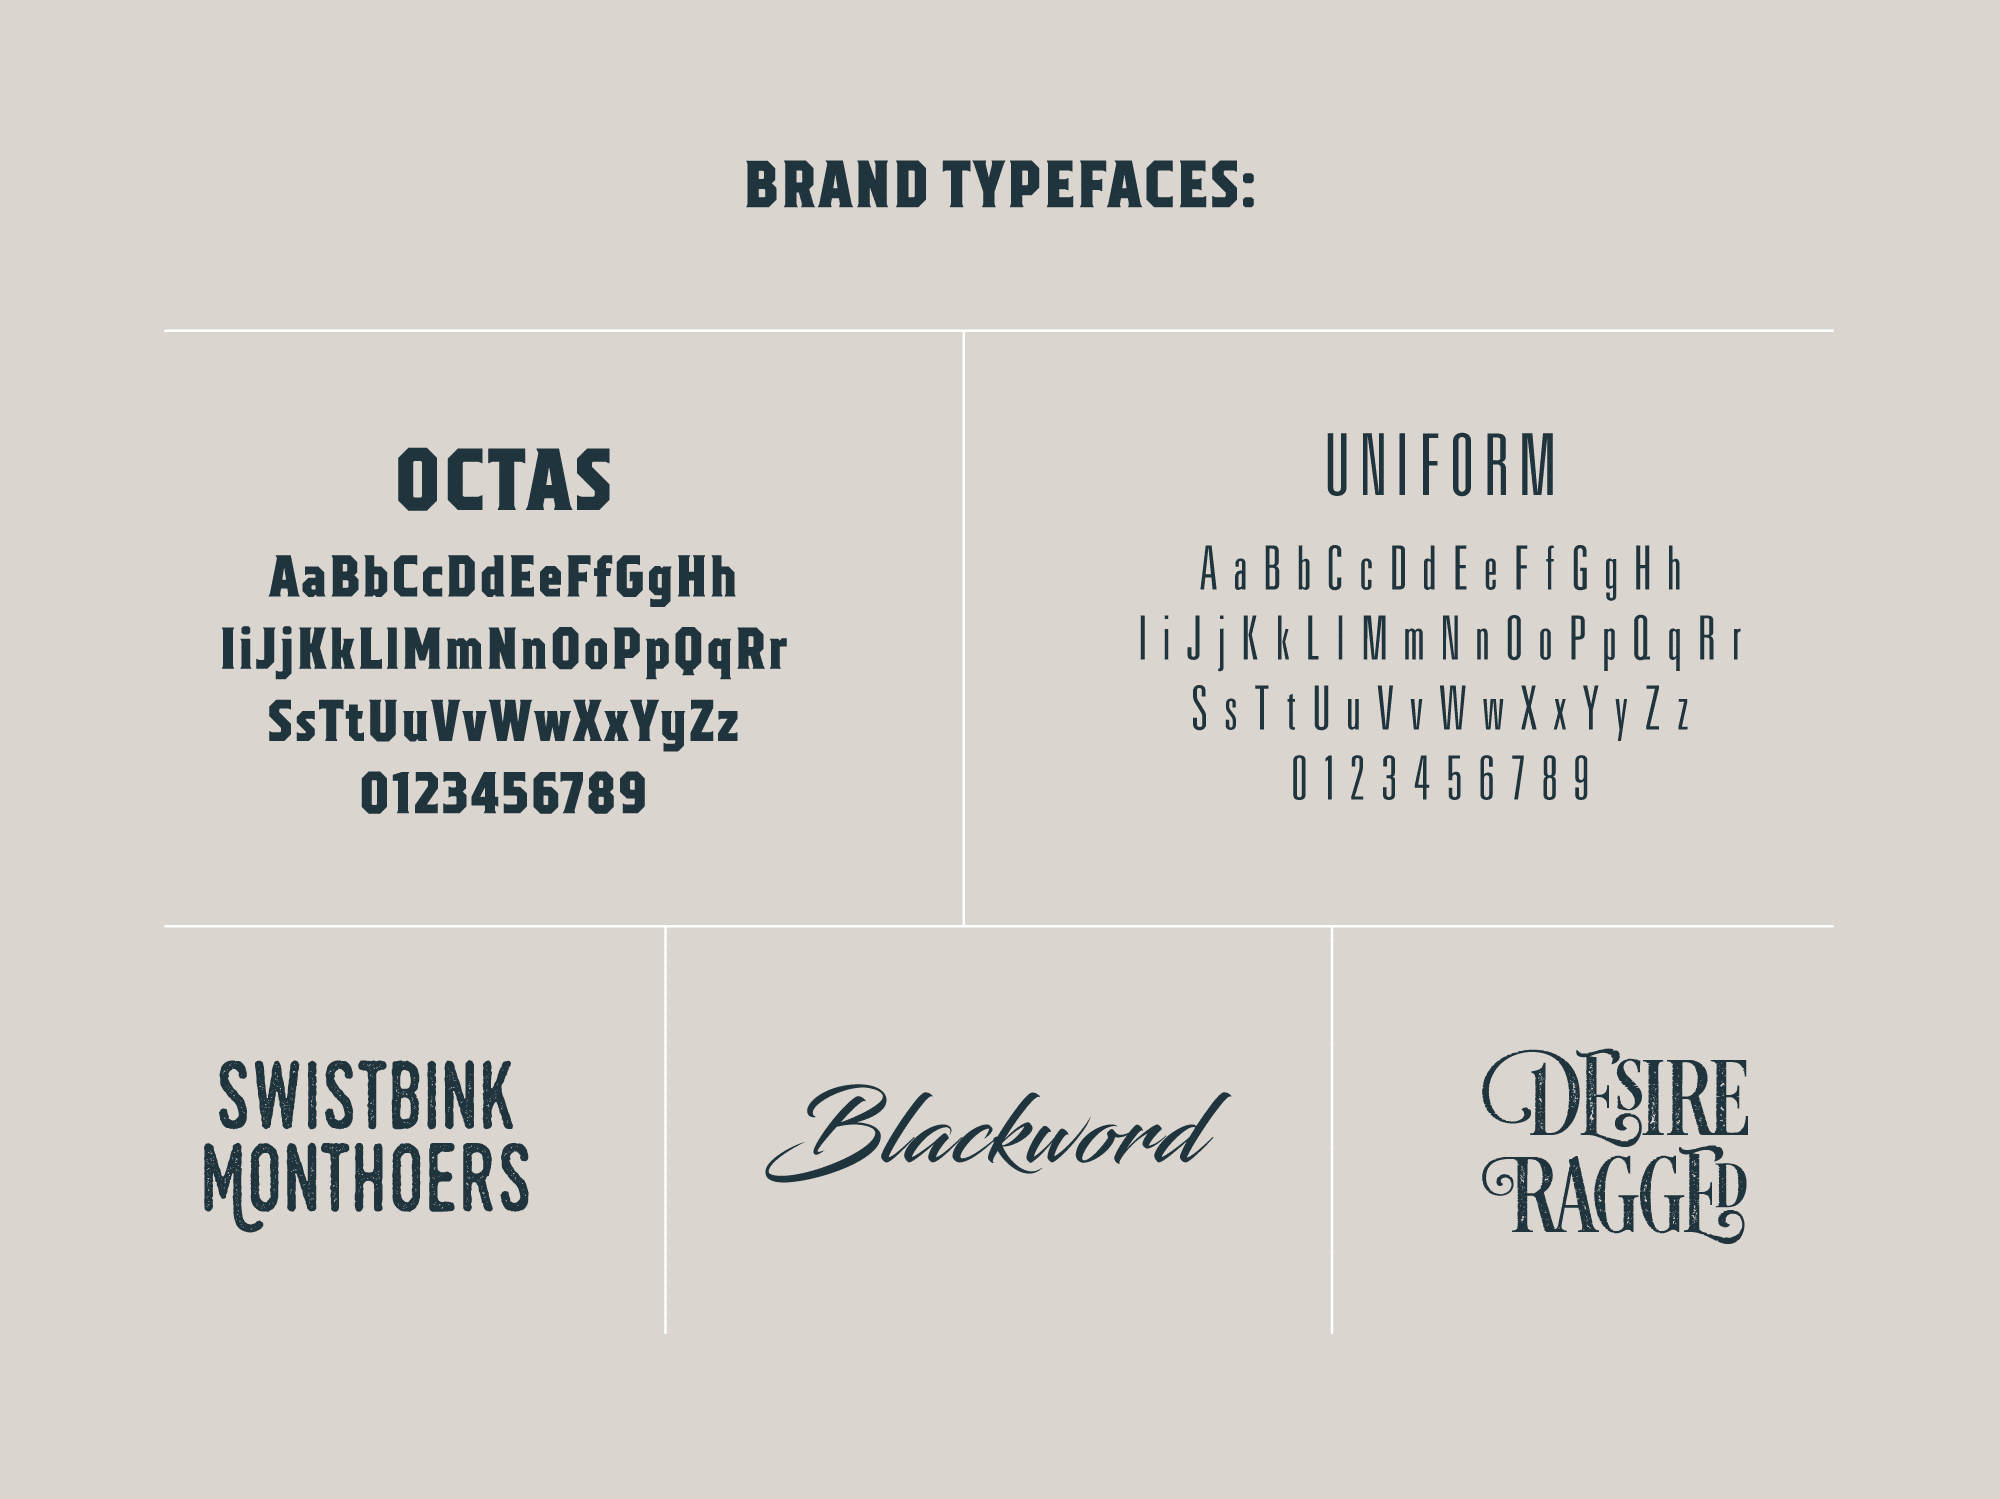 Bear River Brewing branding typefaces